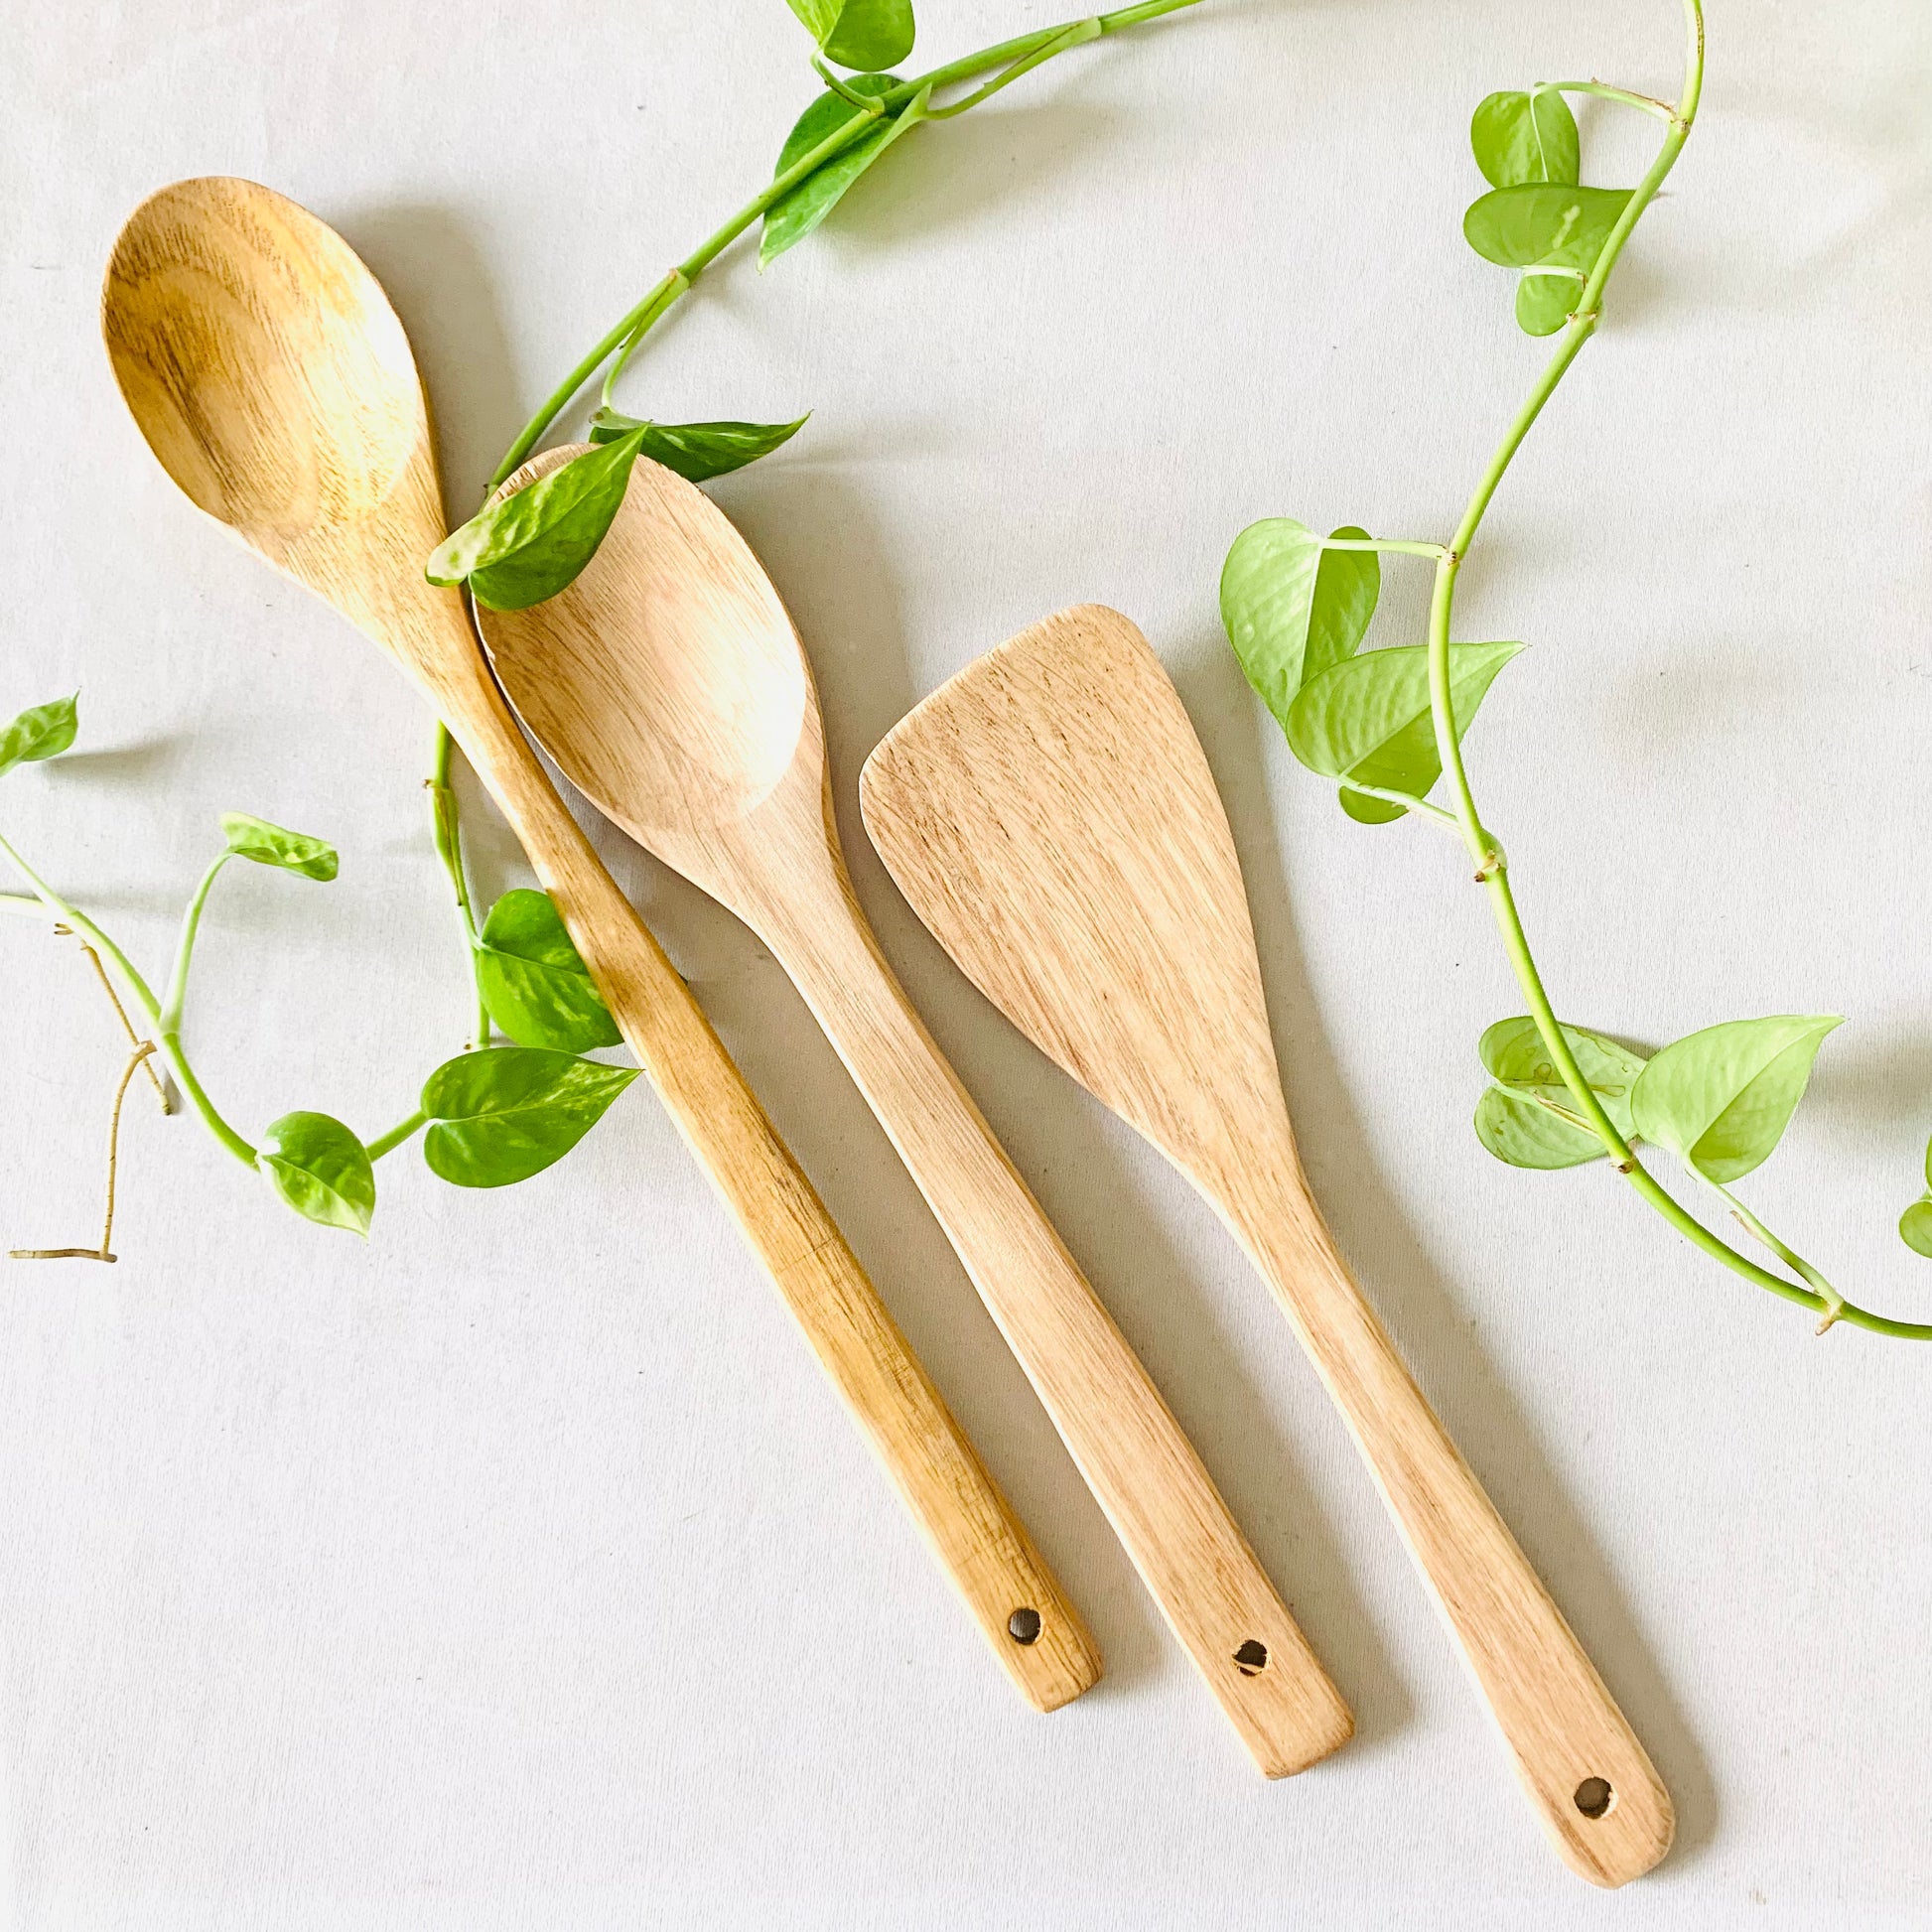 DAIYSLIFE Natural and Eco-Friendly Bamboo Spatula Spoons for non-stick pans